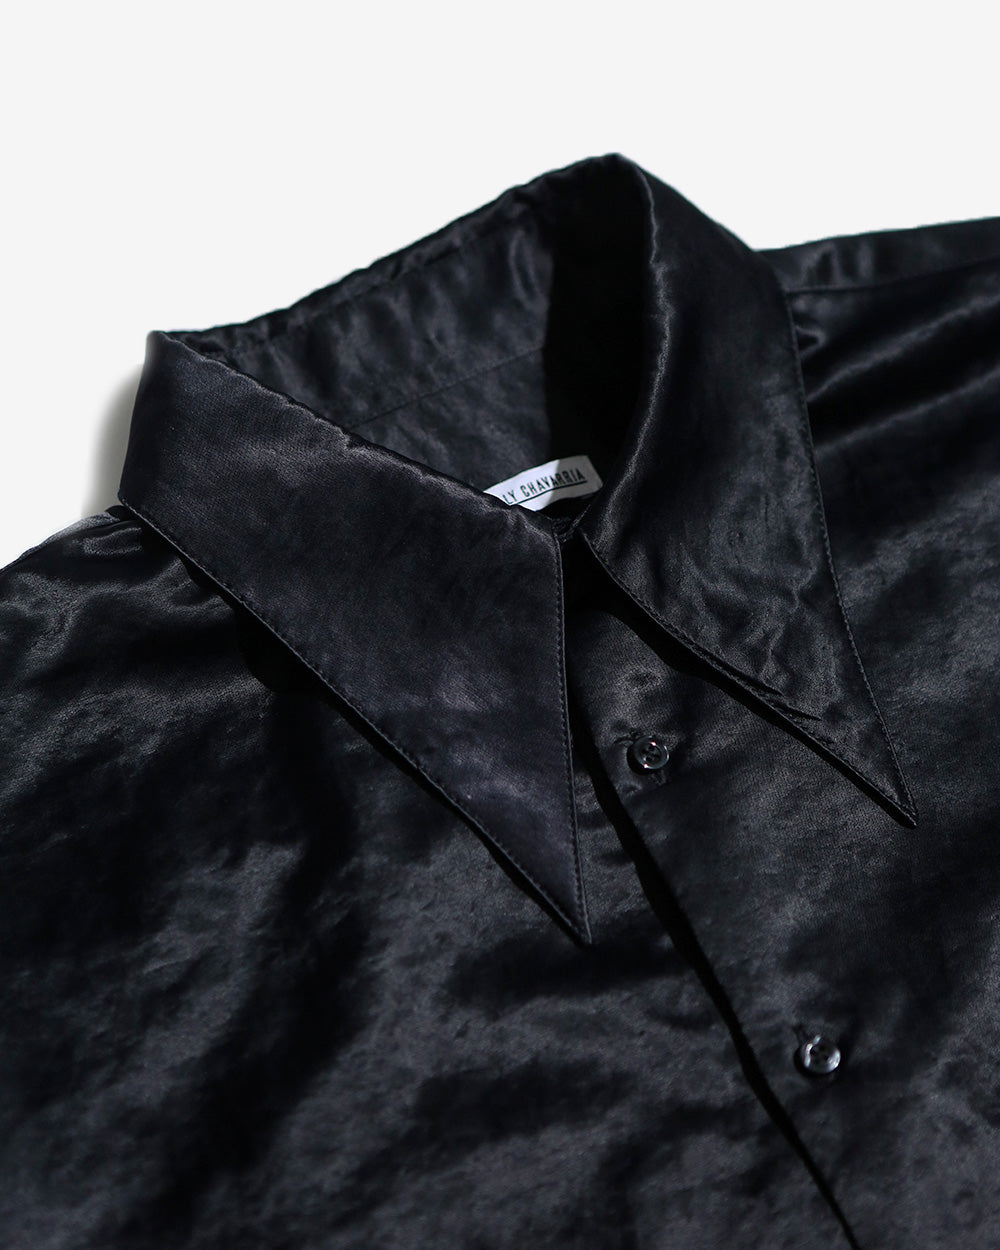 Point Collar Shirt Black